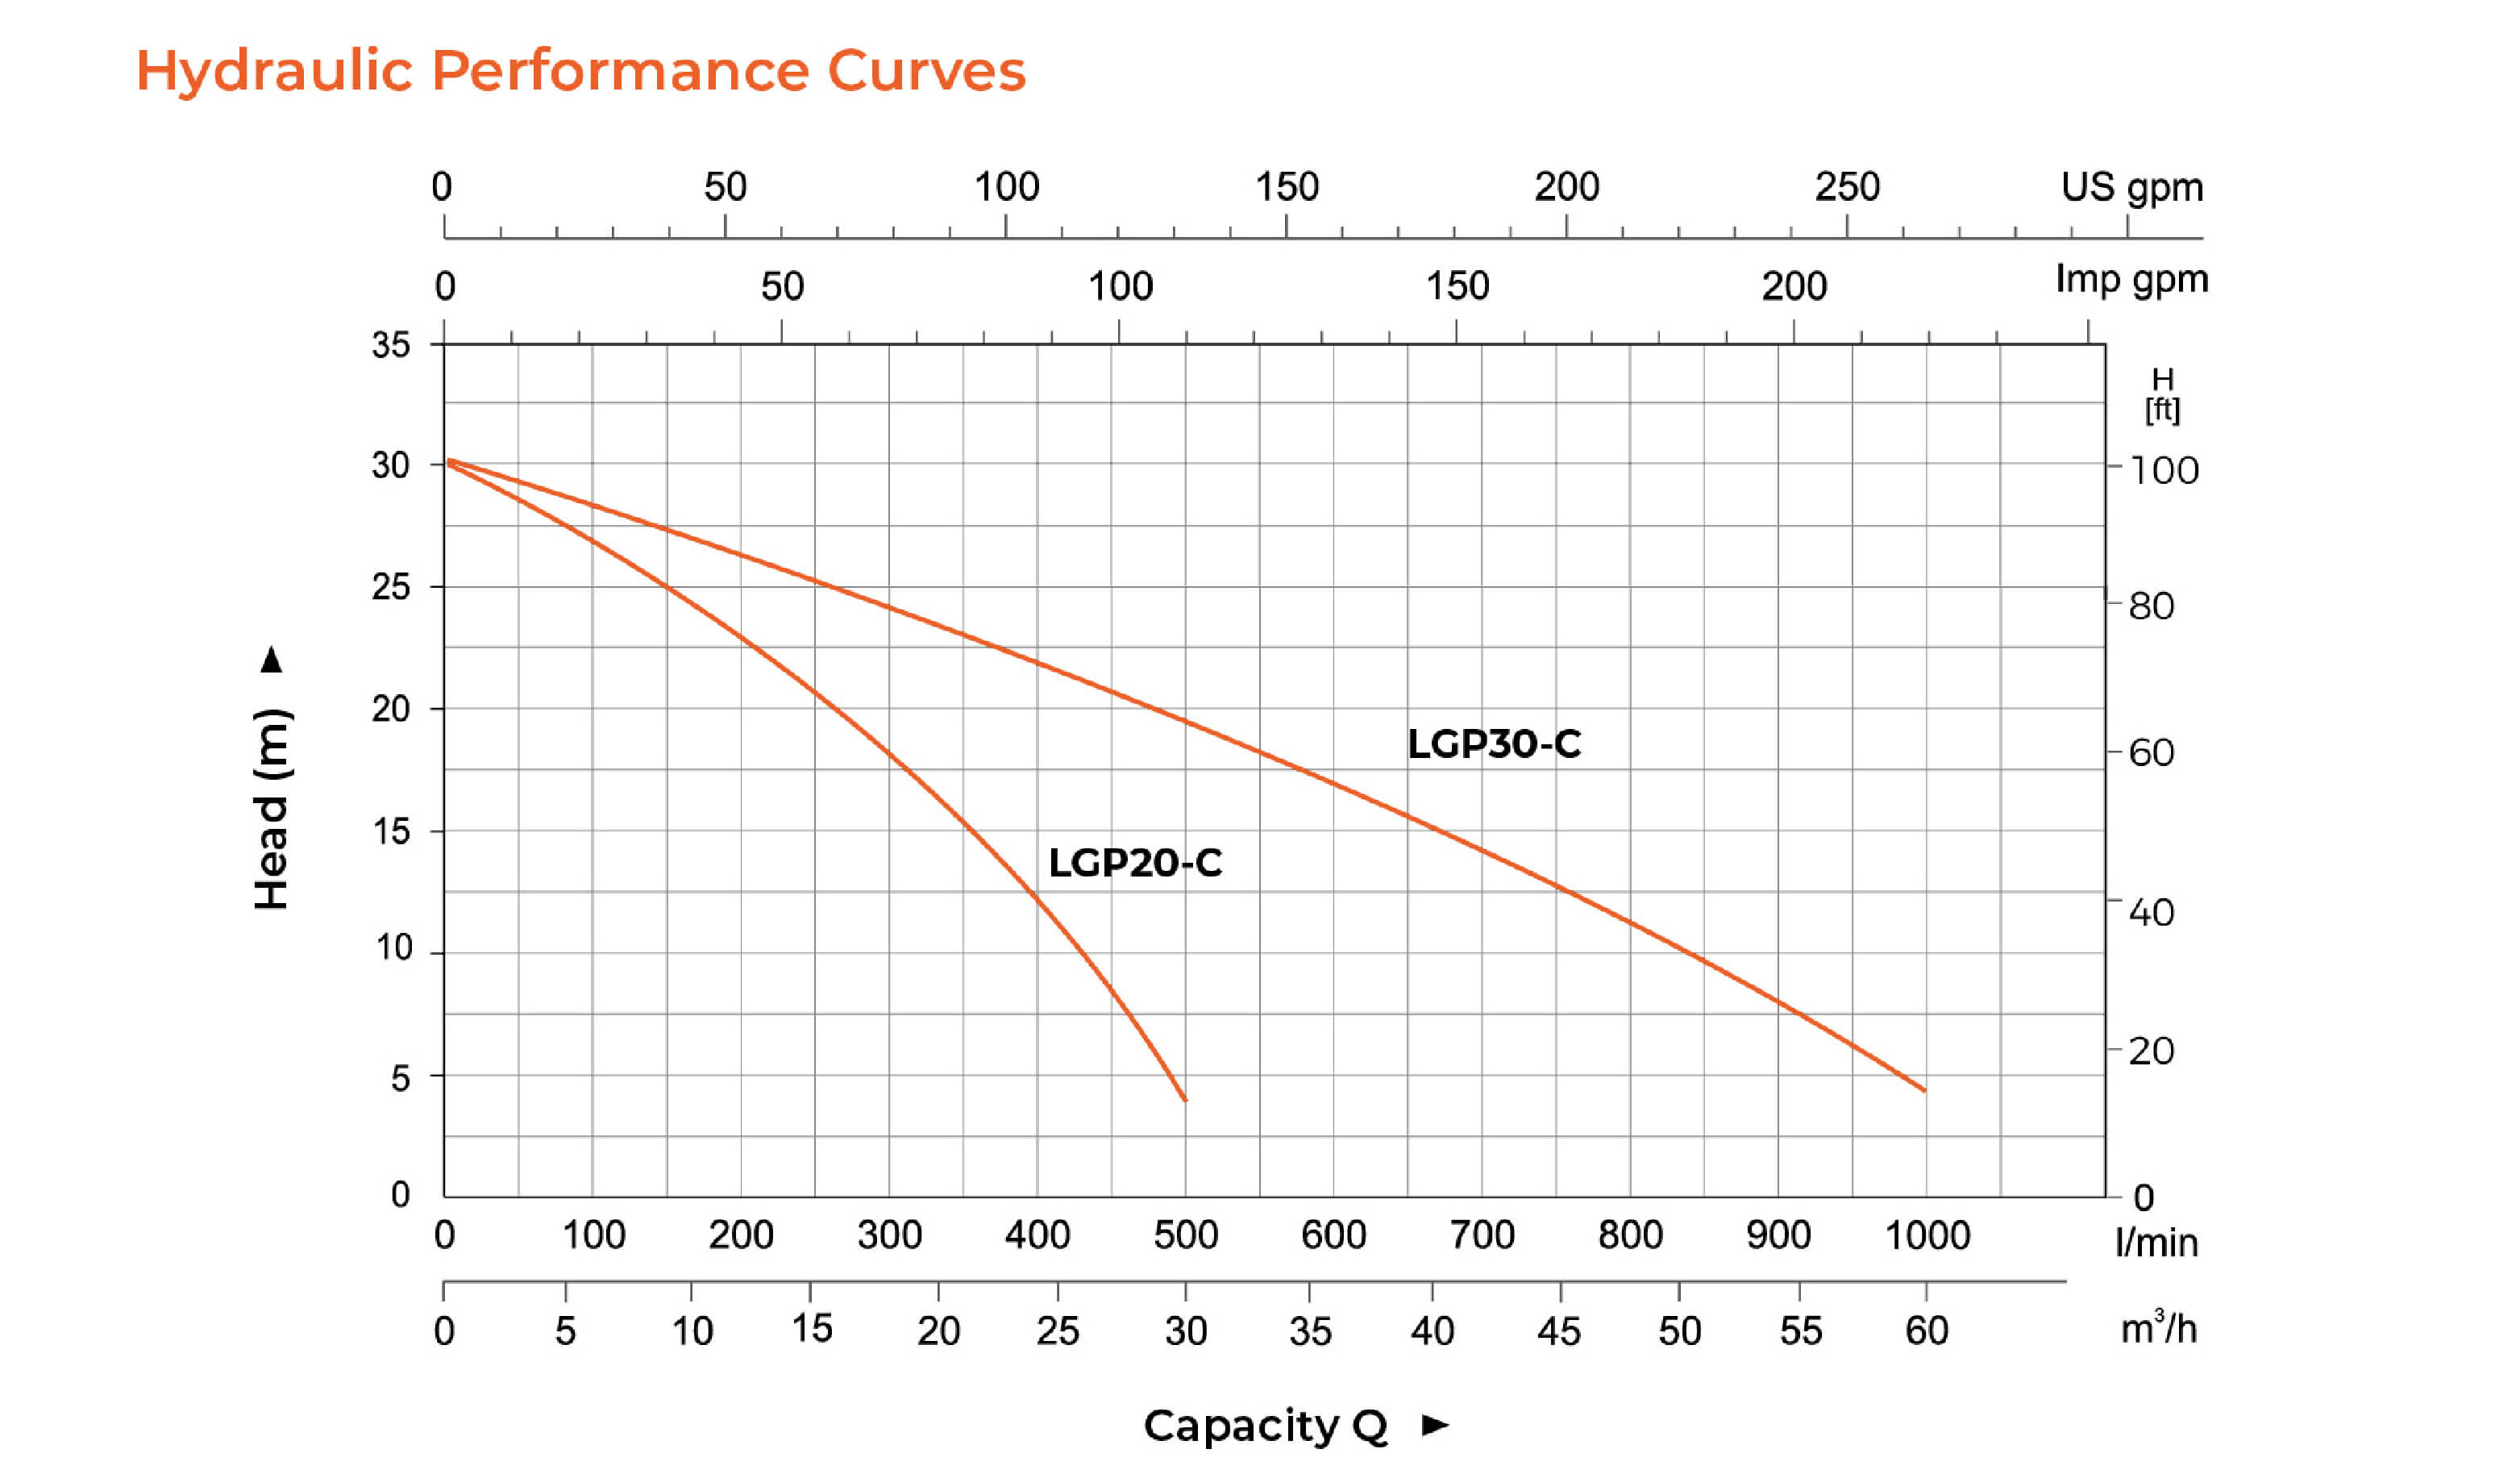 LGP-C Gasoline Water Pump Hydraulic Performance Curves